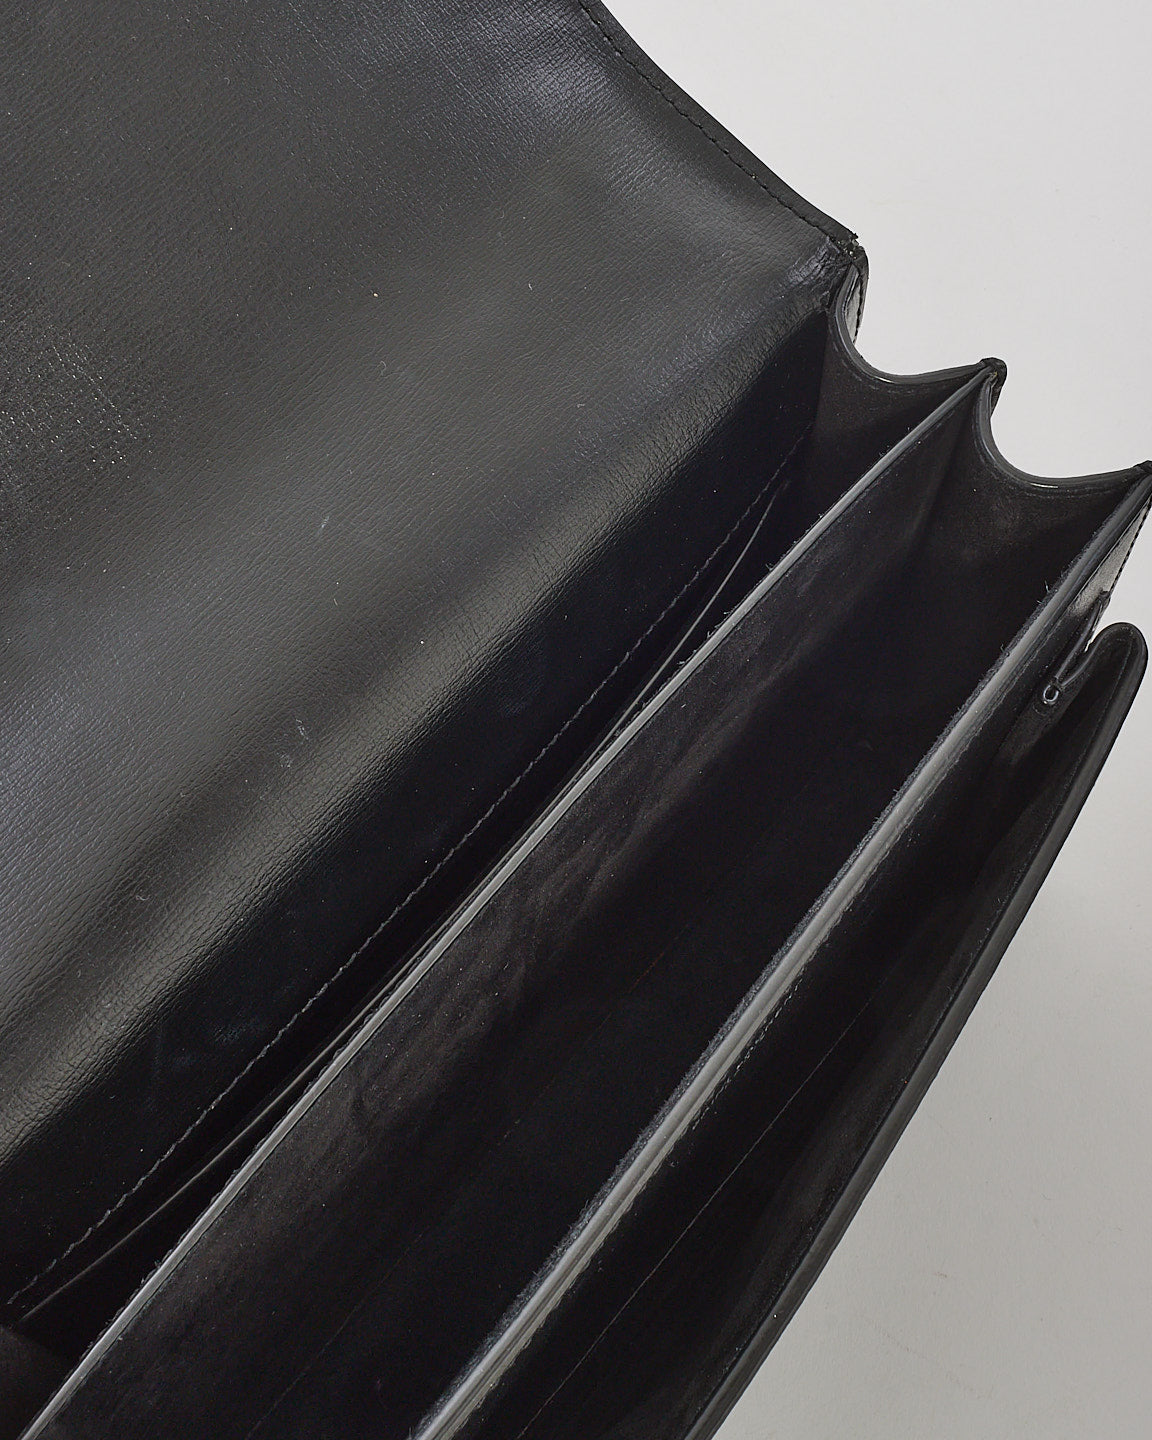 Saint Laurent Black Leather Medium Sunset Bag SHW